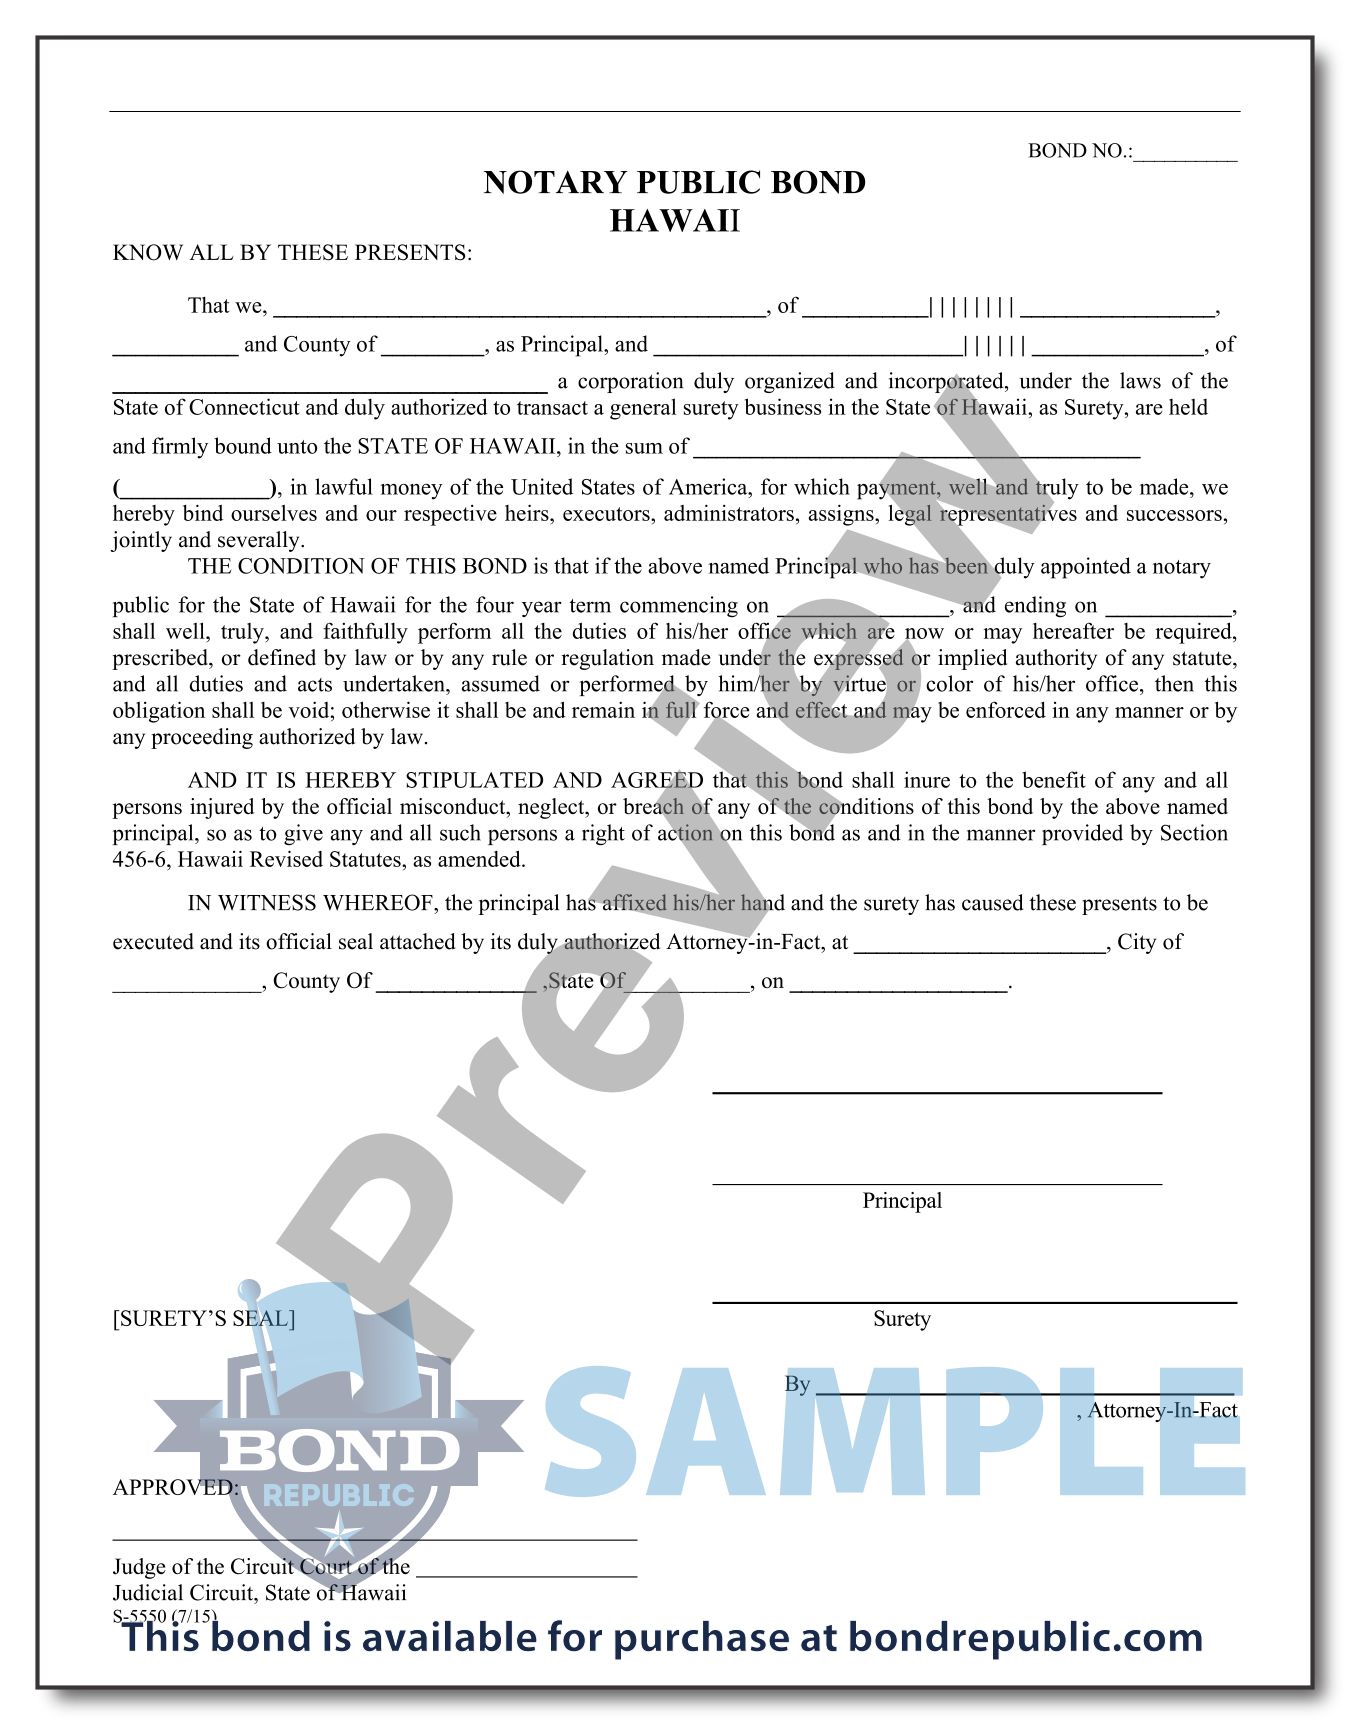 hawaii-notary-bond-and-eo